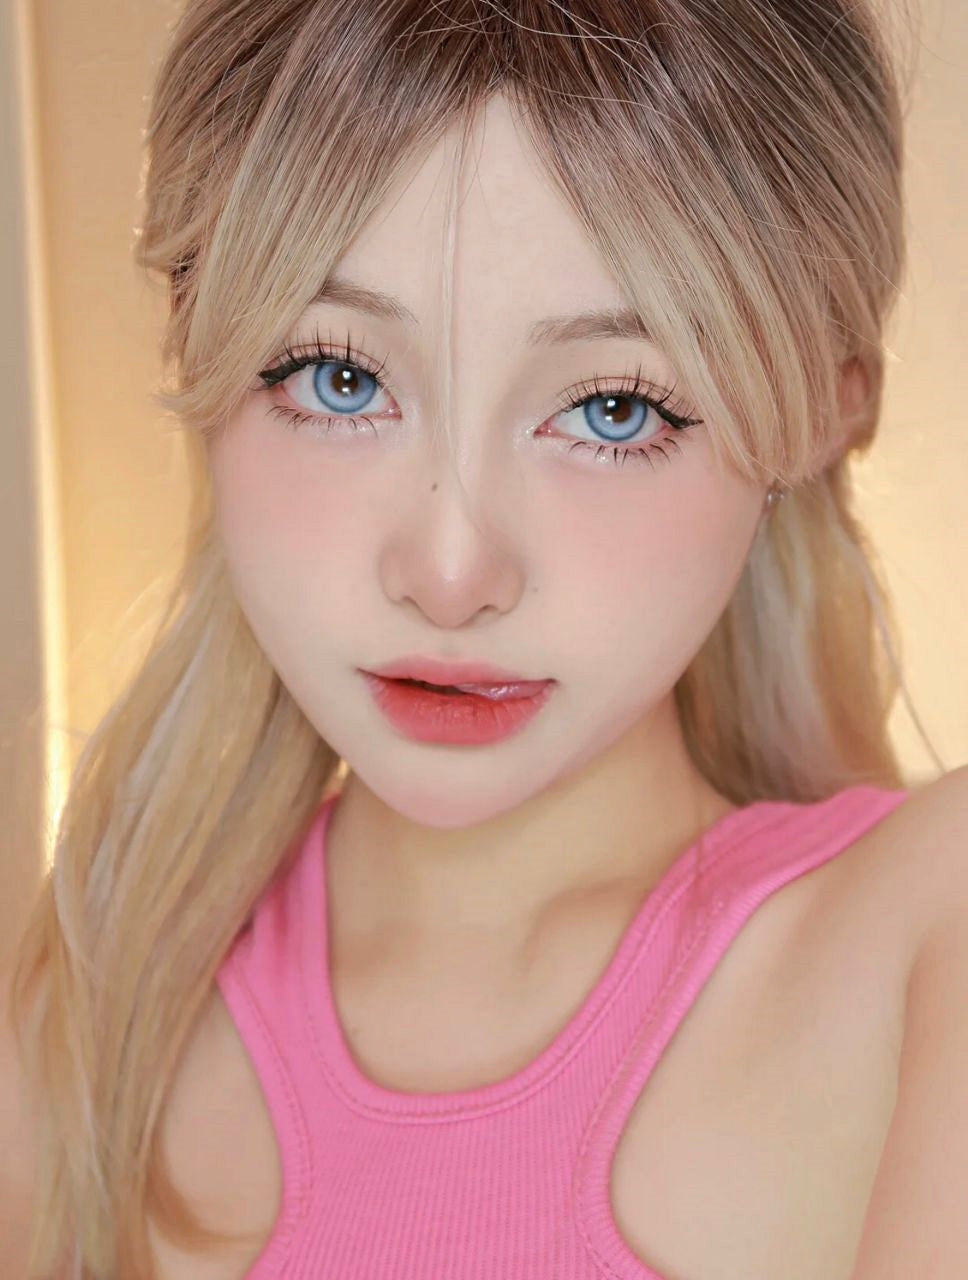 Ohmykitty4u - Anime eyes makeup Tutorial 👁Contacts : Sweet Escape Blue💙  Diameter 16mm #ohmykitty4u #omksweetescapeblue #bluecontacts #blueeyes  #contacts #circlelenses